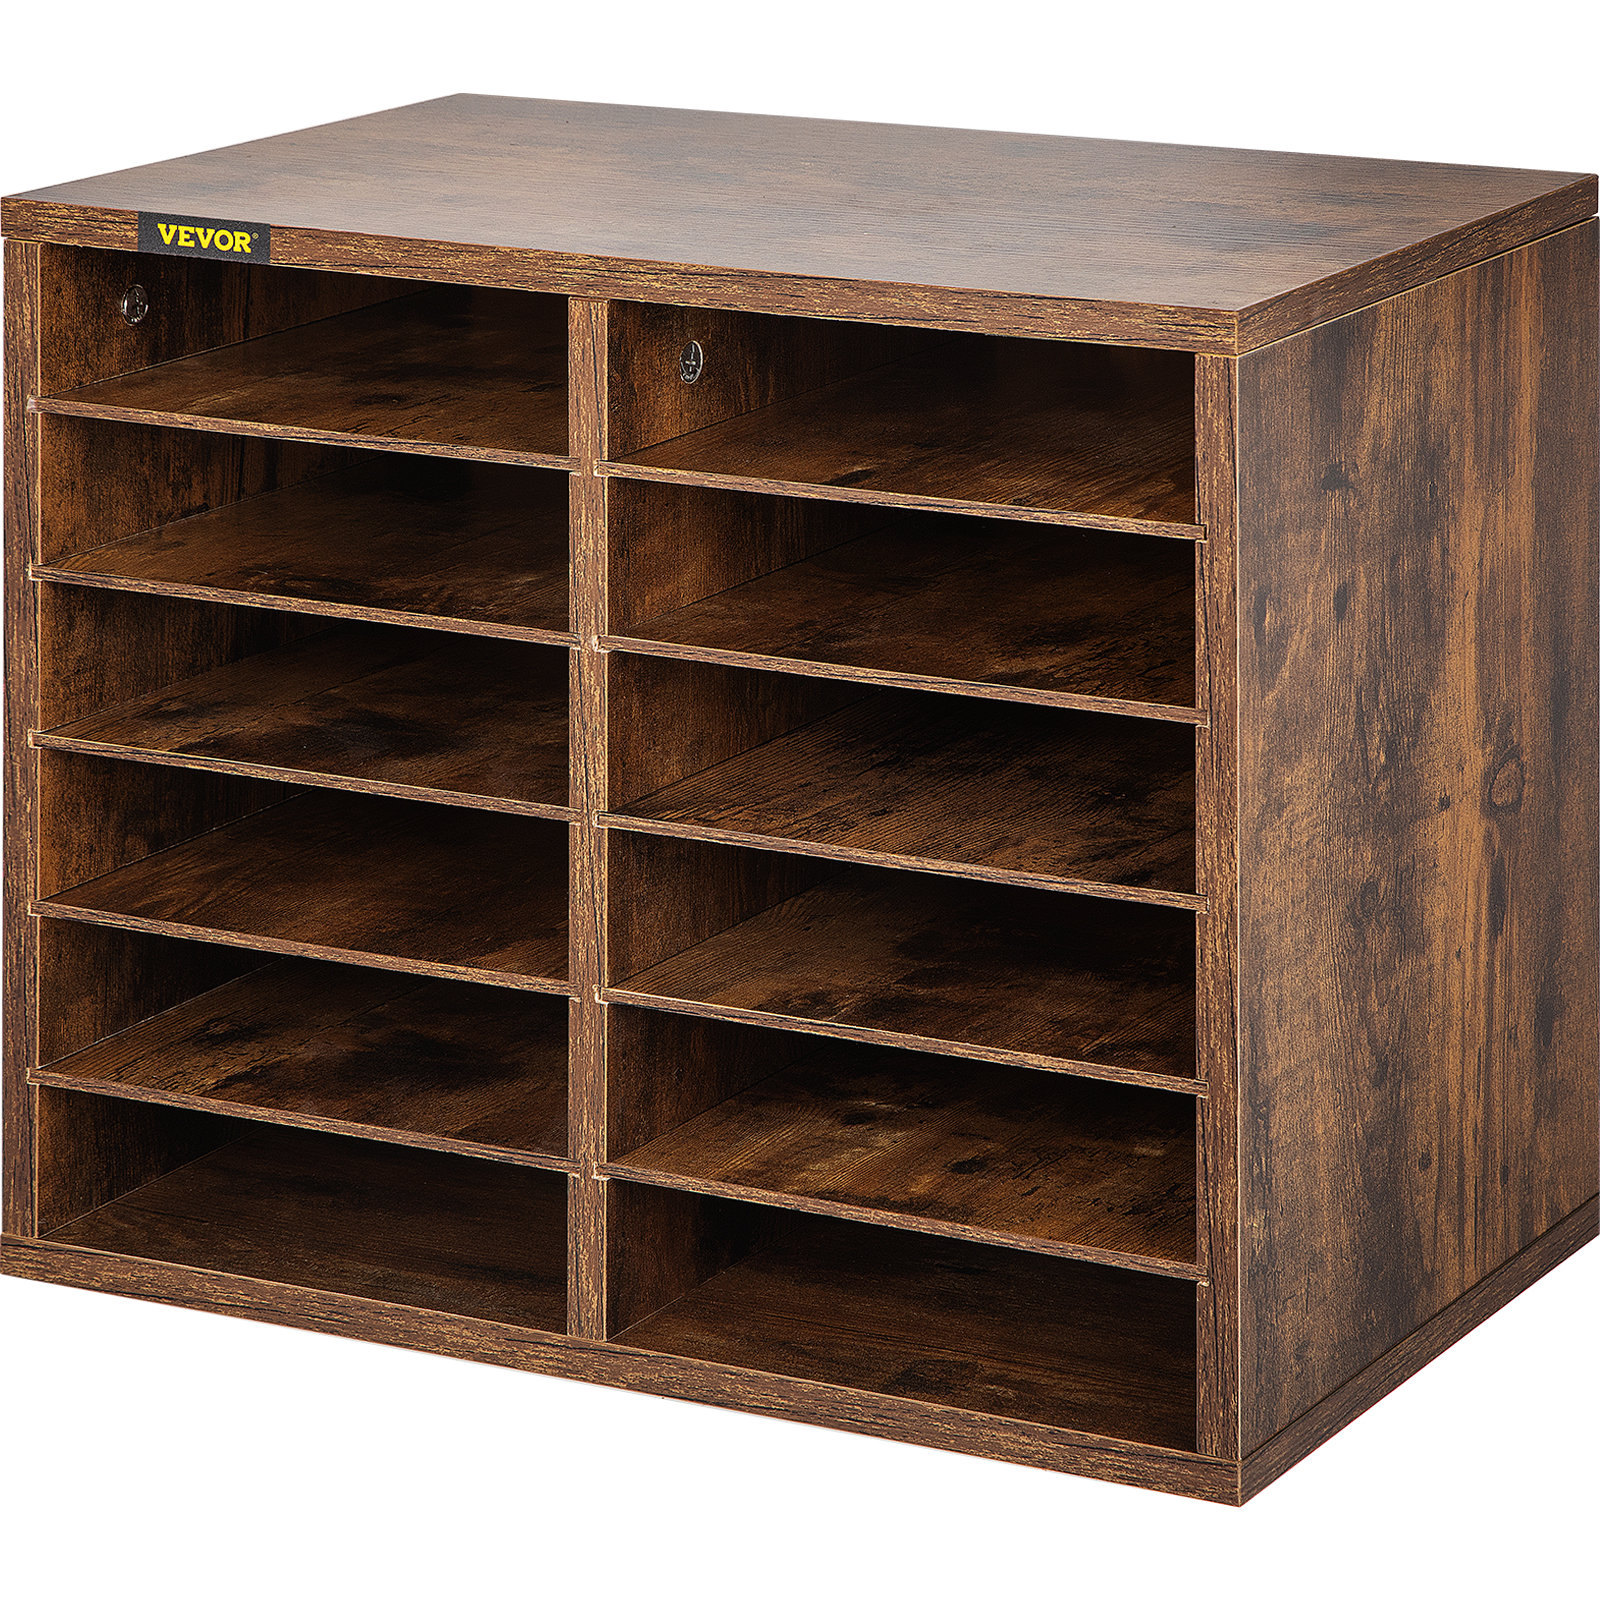 VEVOR 12 Compartments Wood Literature Organizer, Adjustable Shelves, Medium Density Fiberboard Mail Center, Office Home School